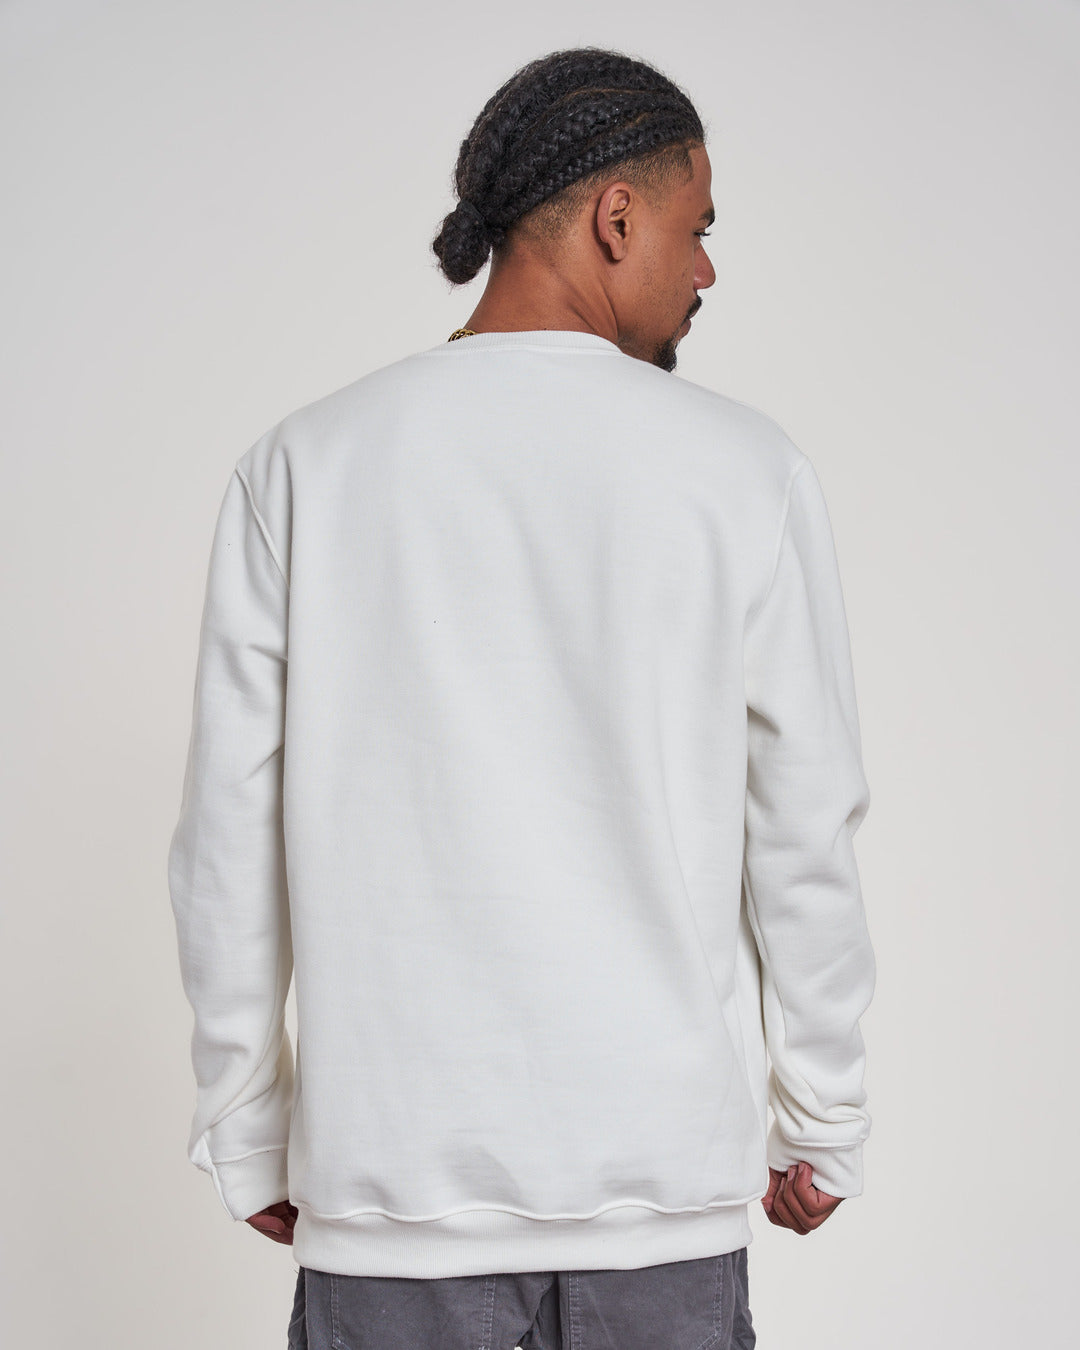 Crewneck Sweatshirt - Plain Off White